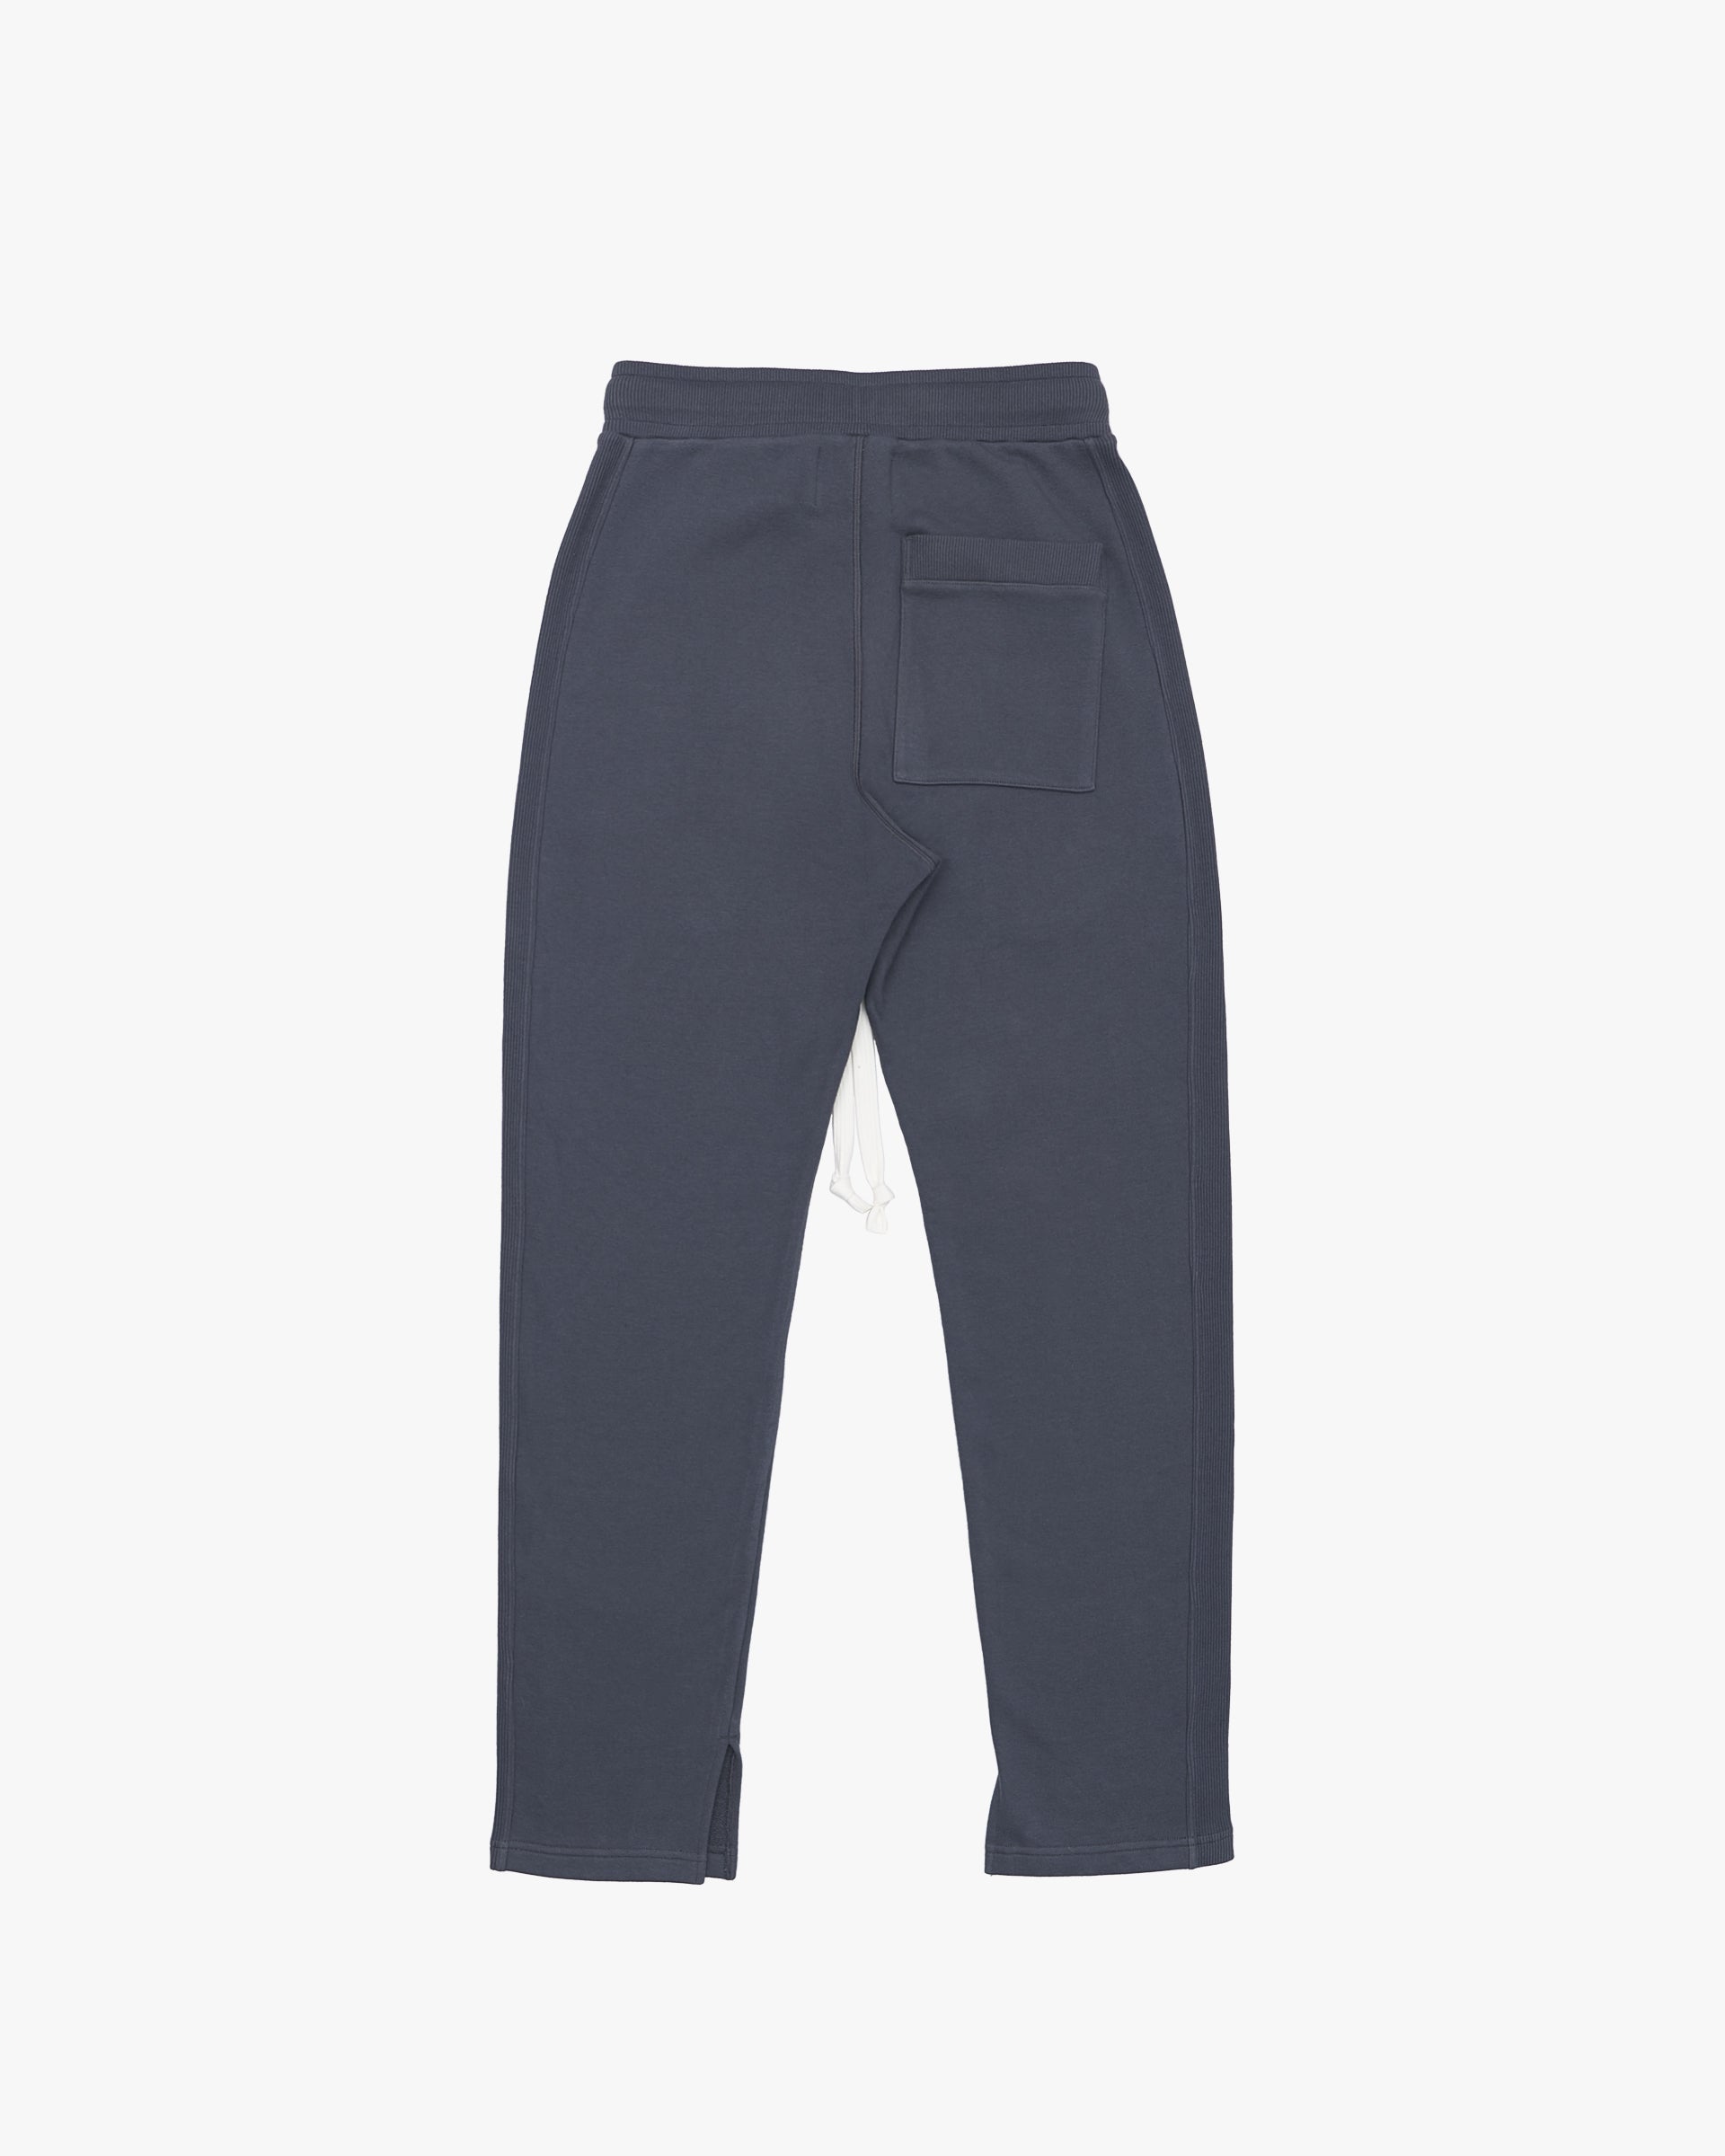 NEUTRALS Split Pants - Vintage Grey